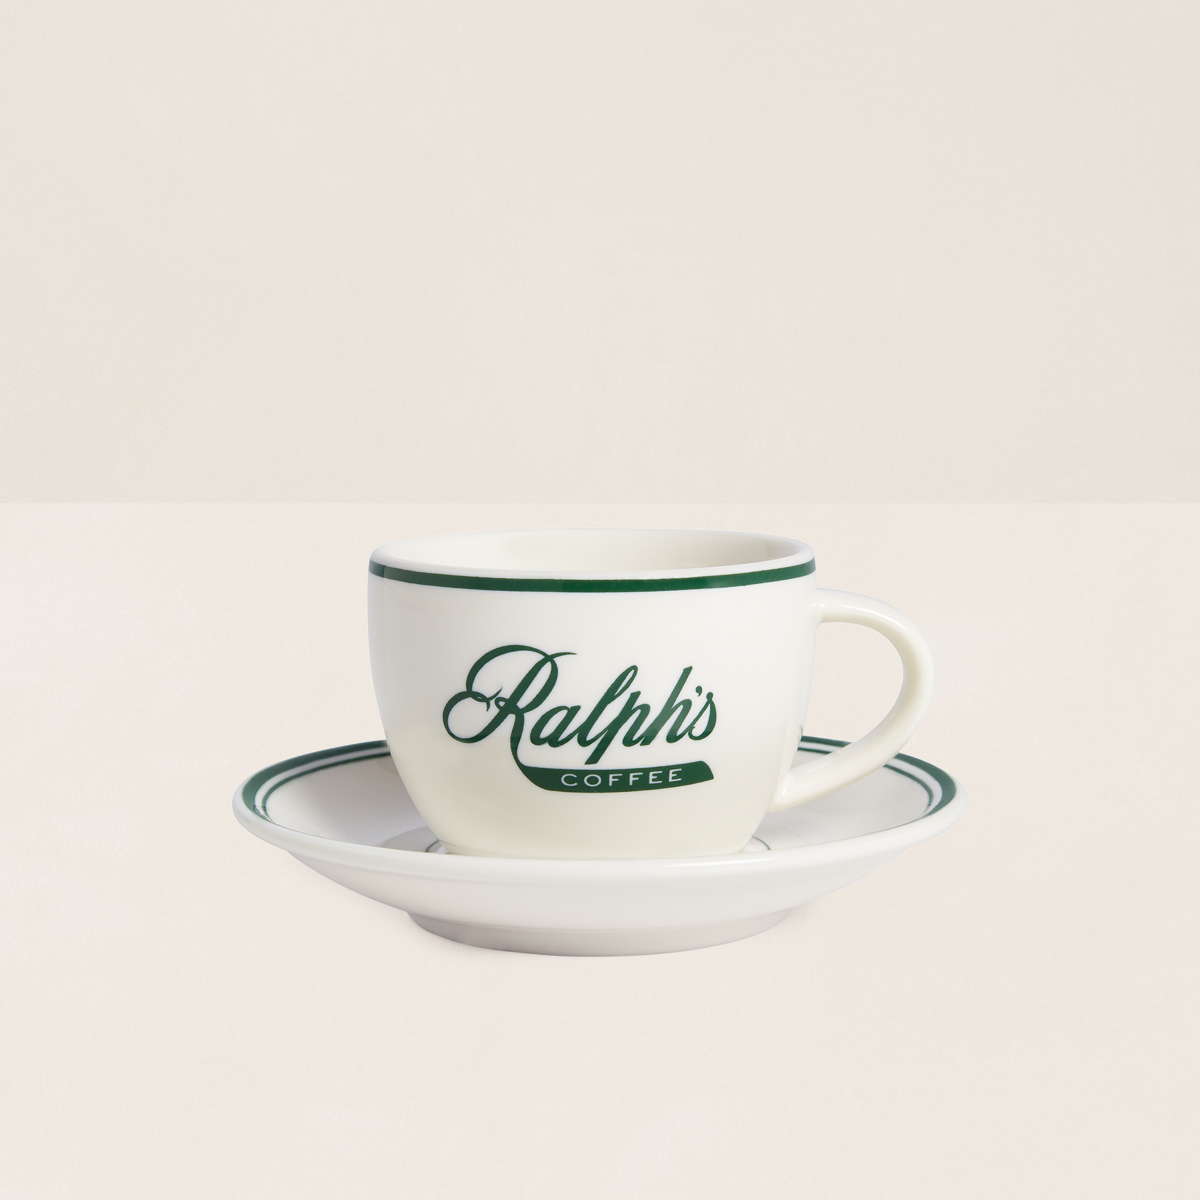 cute vintage mauve espresso cups and handmade tea cups / saucers